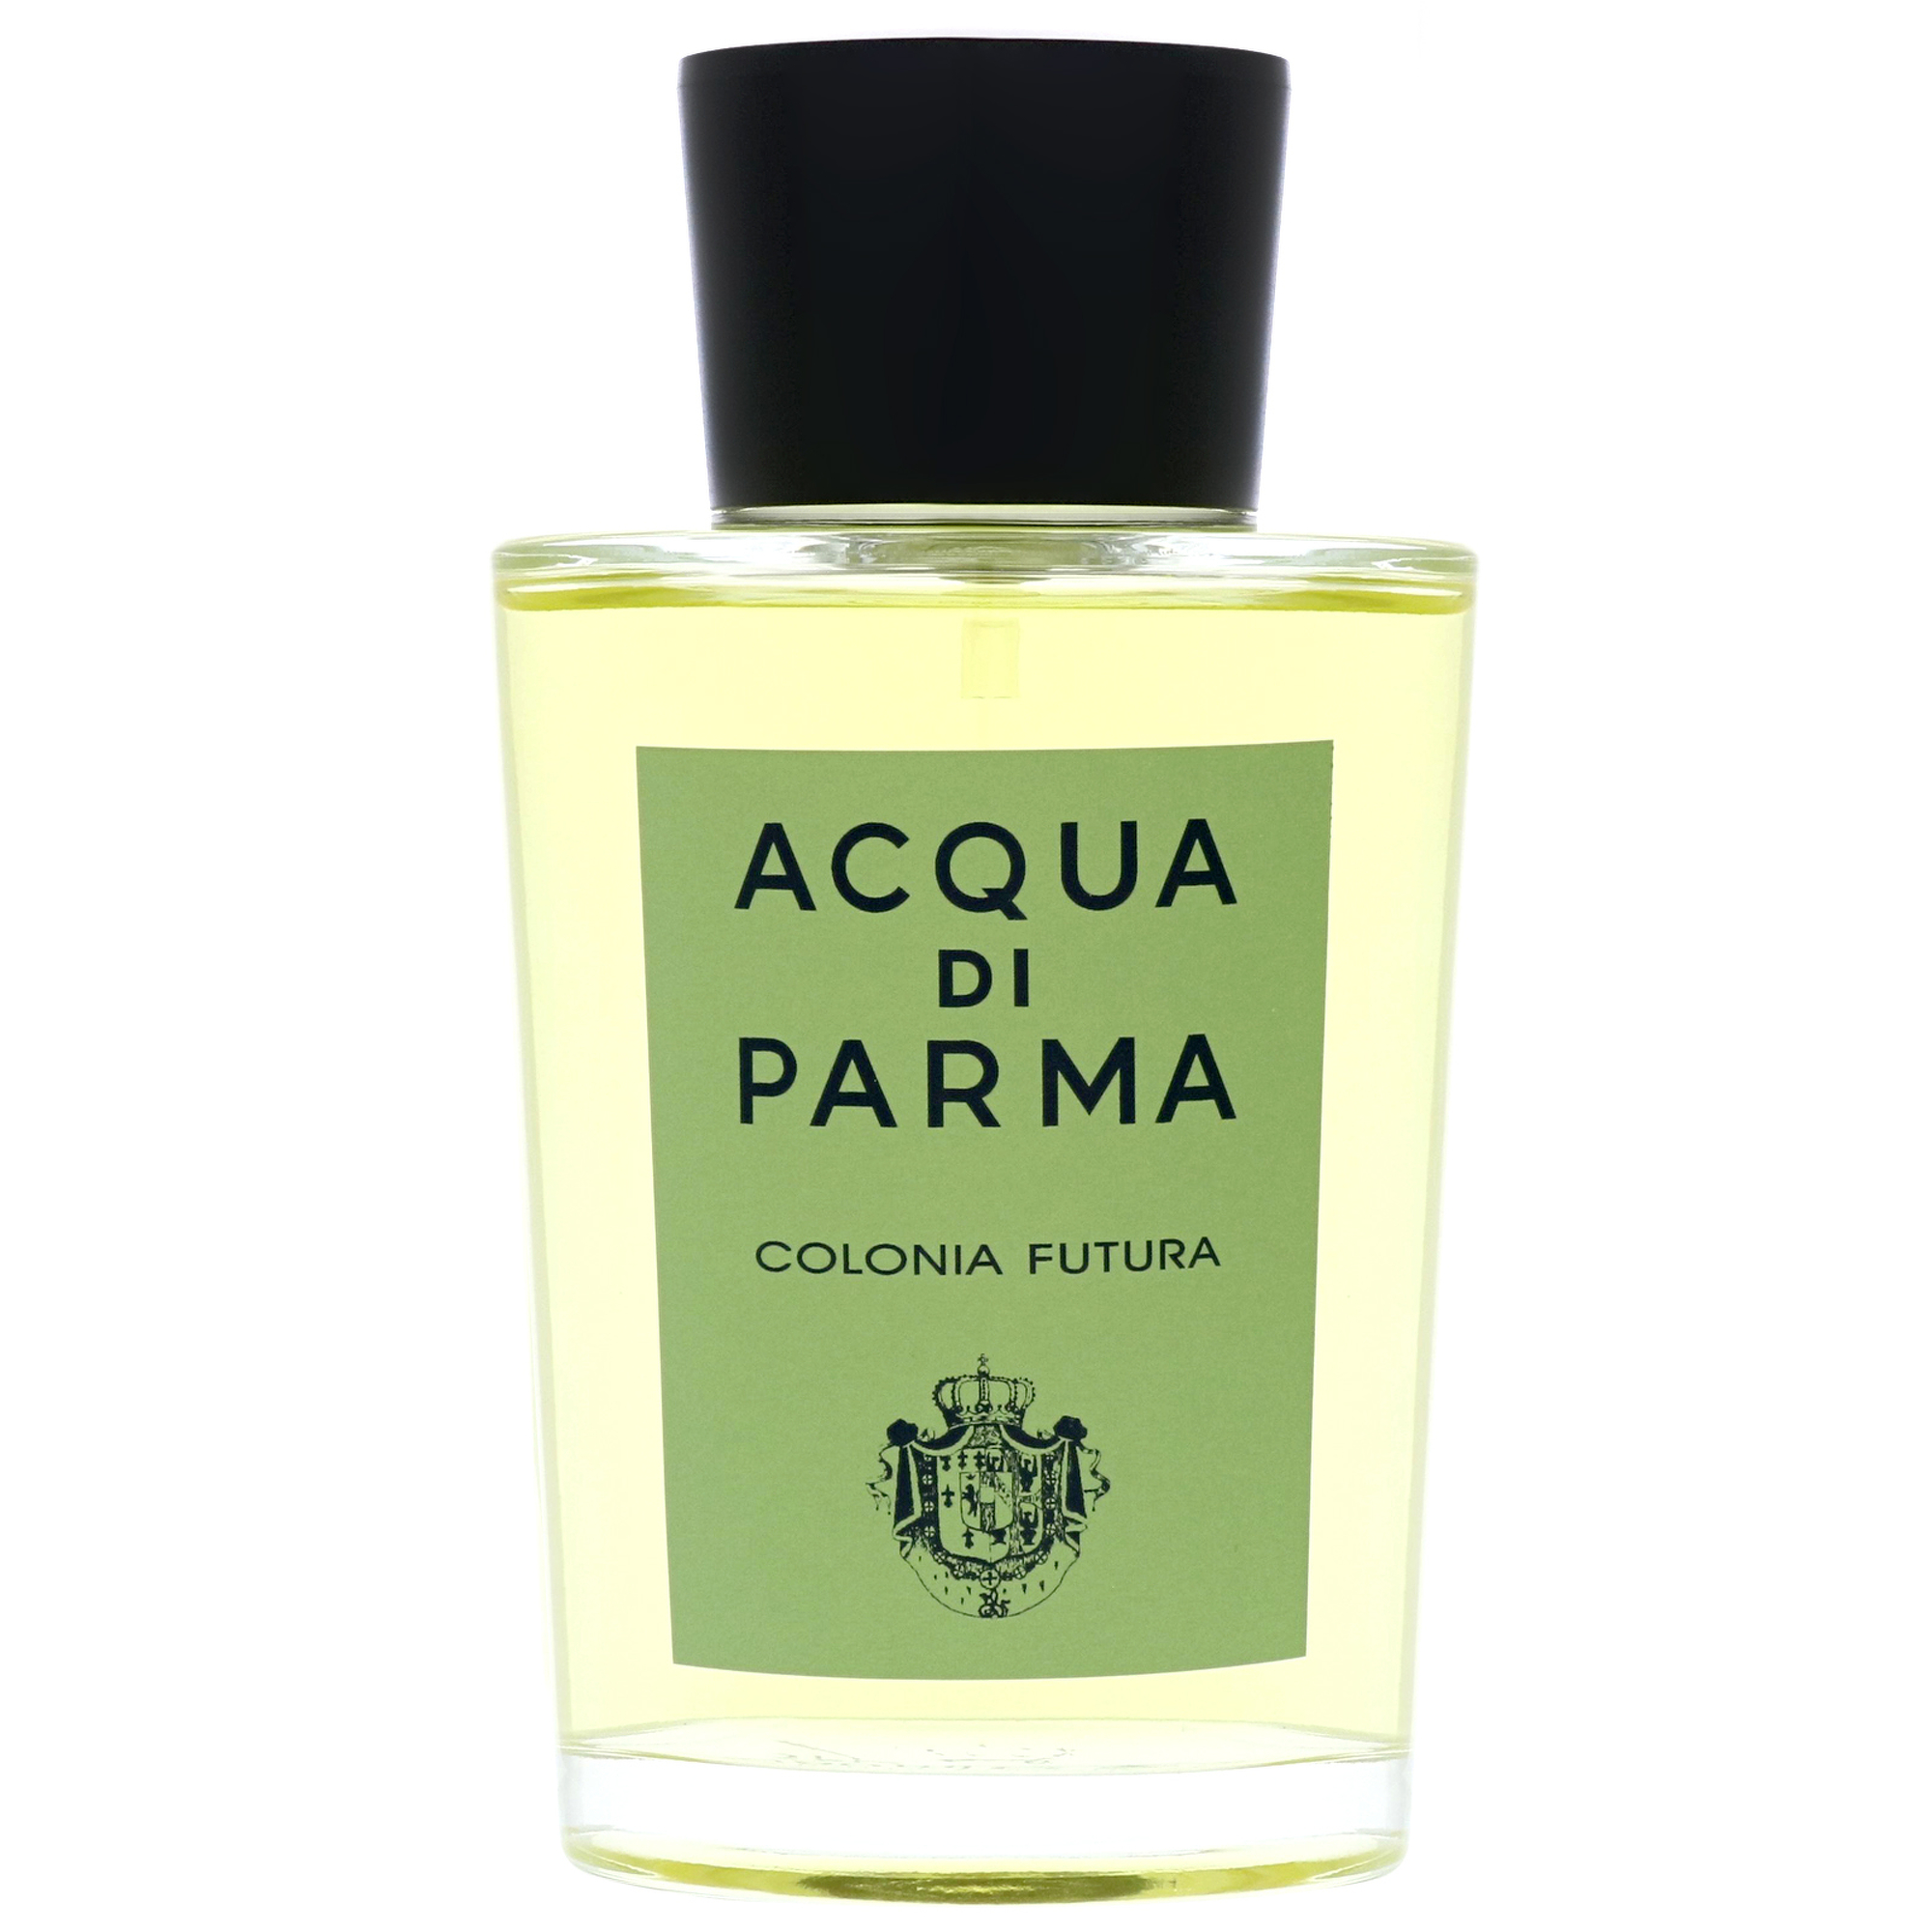 Photos - Women's Fragrance Acqua di Parma Colonia Futura Eau de Cologne Natural Spray 180ml 